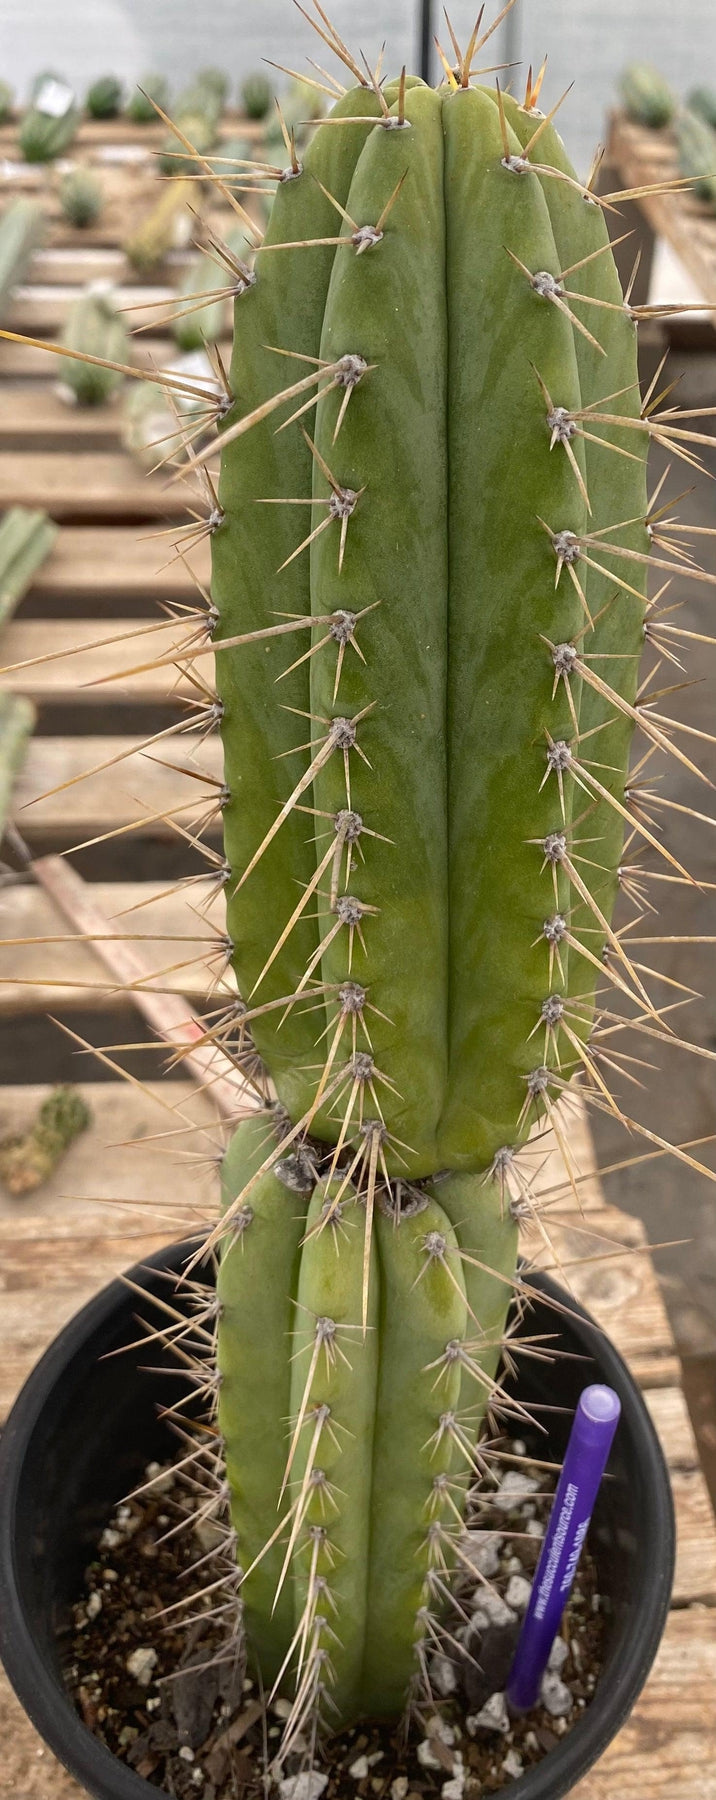 #EC244 EXACT (species) Ornamental Cactus (14.5)-Cactus - Large - Exact-The Succulent Source